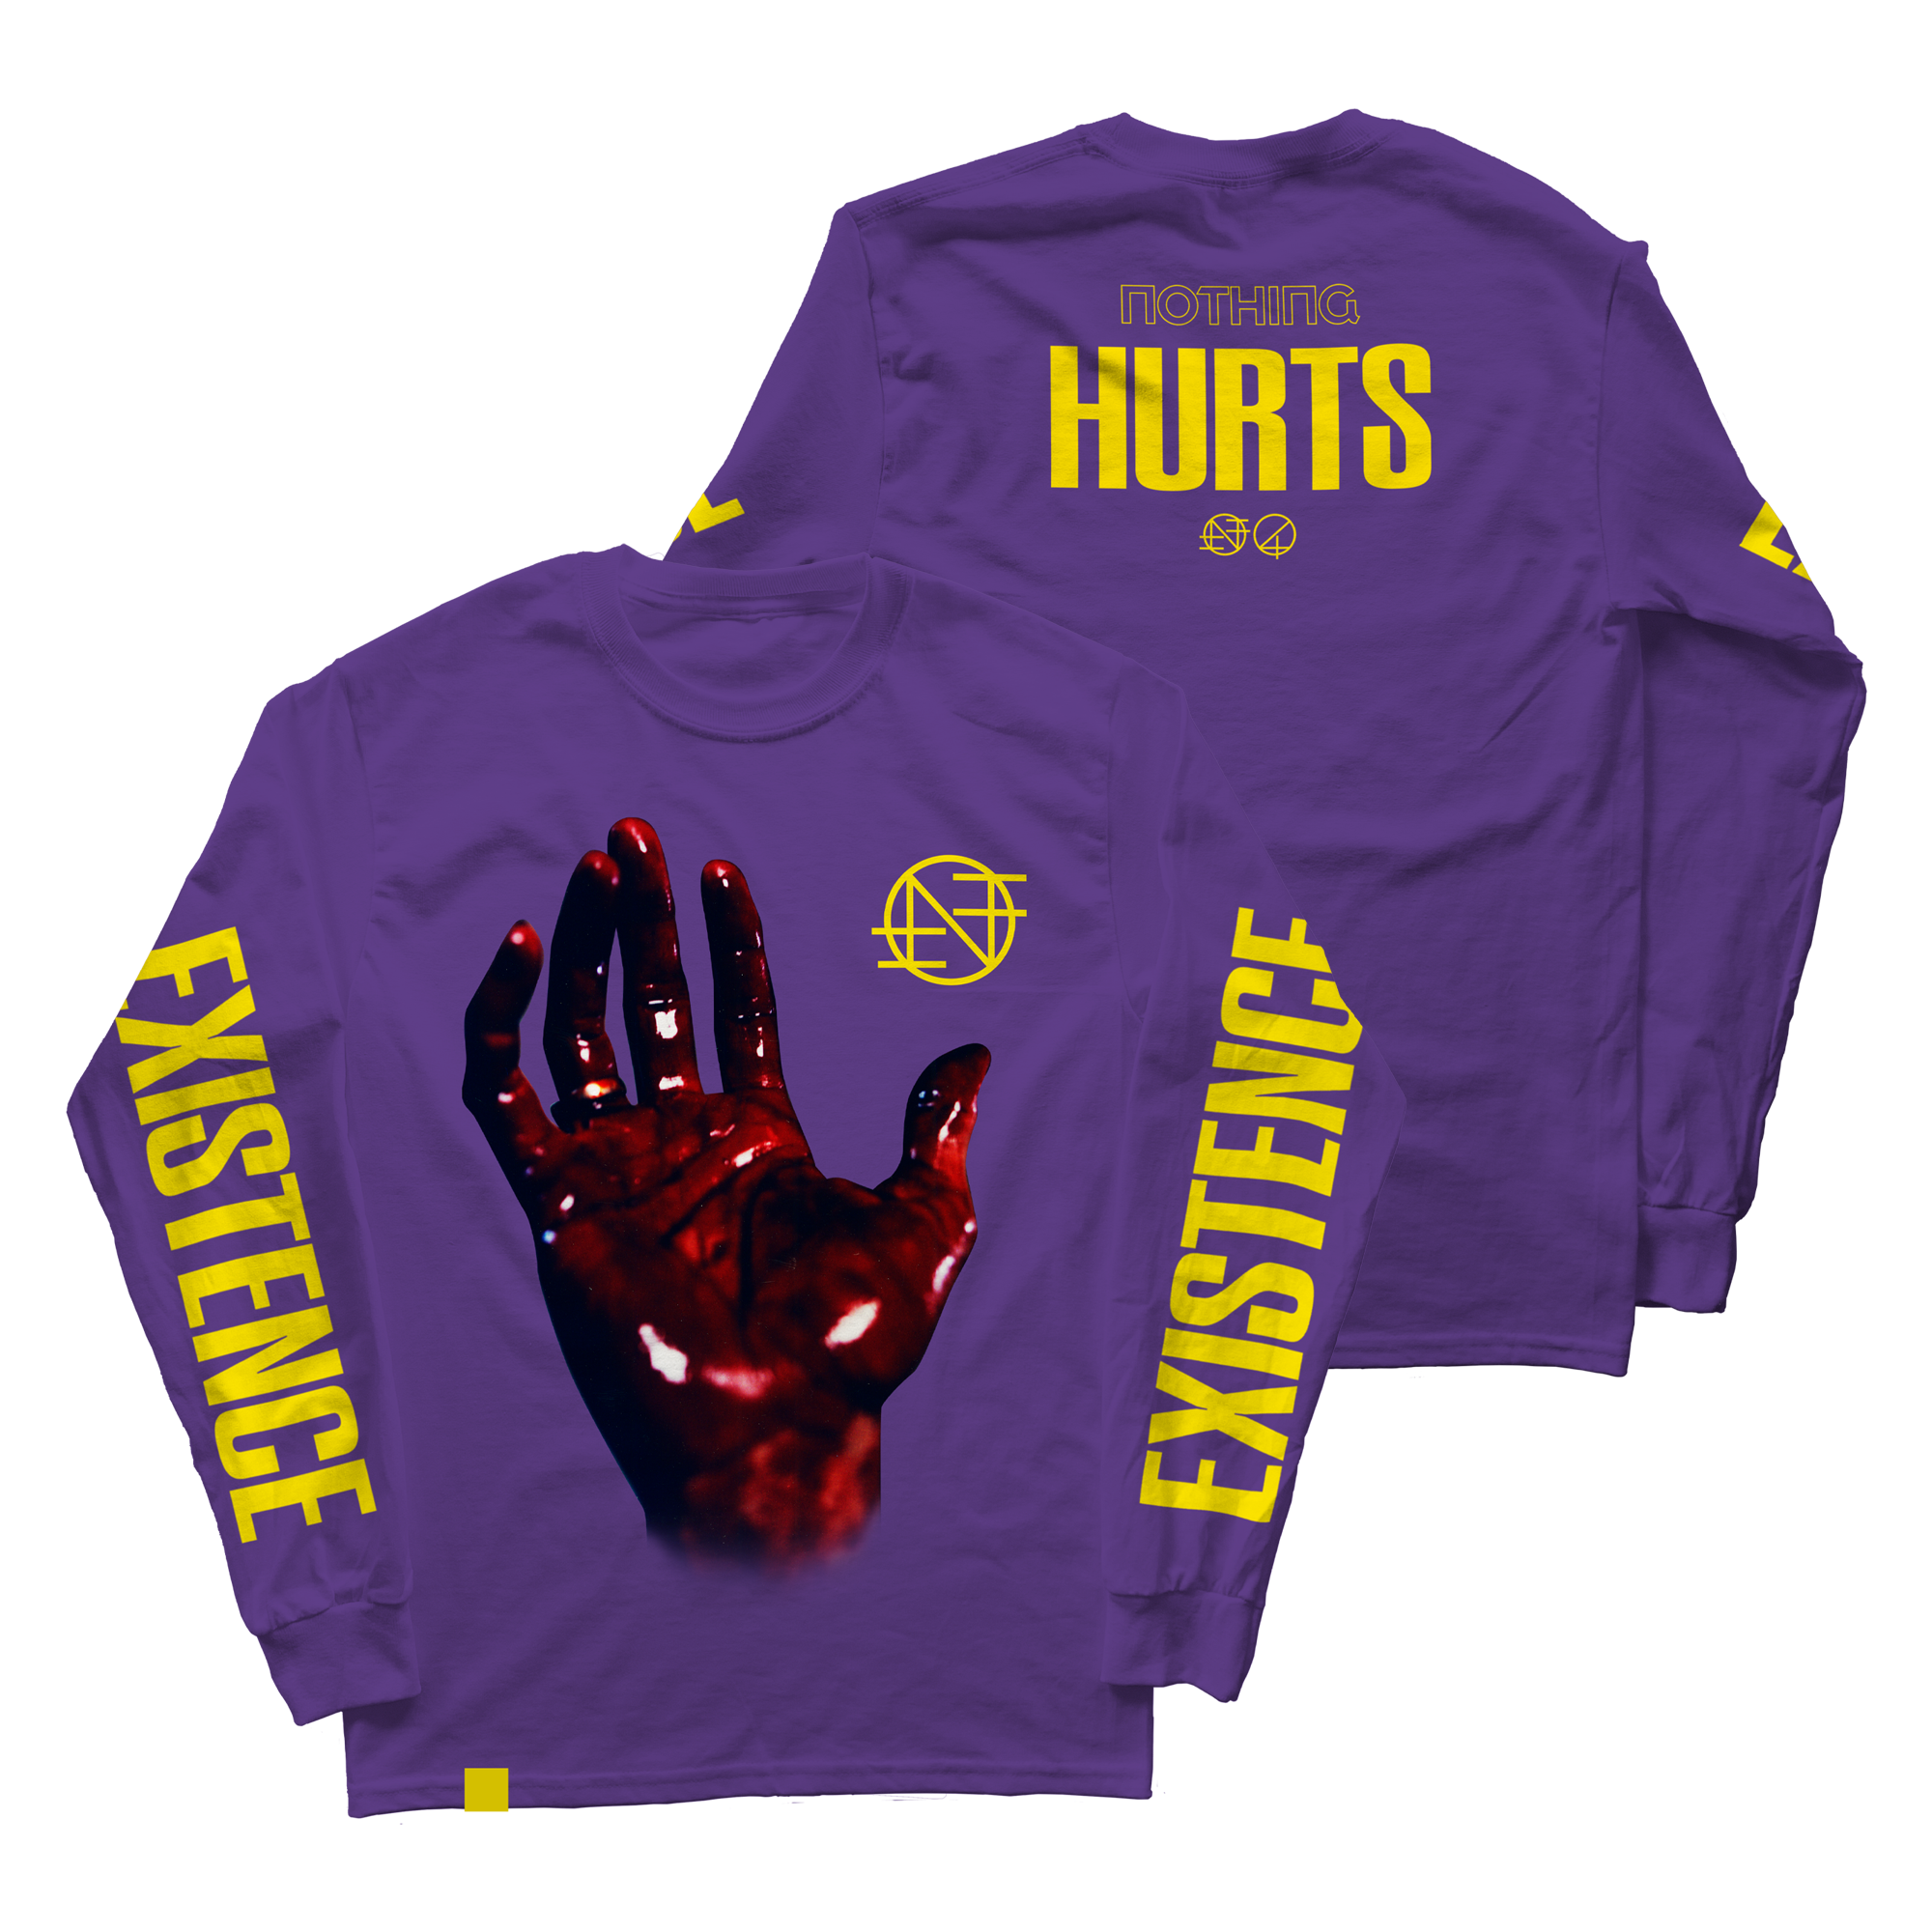 Existence Hurts Long Sleeve (Purple)